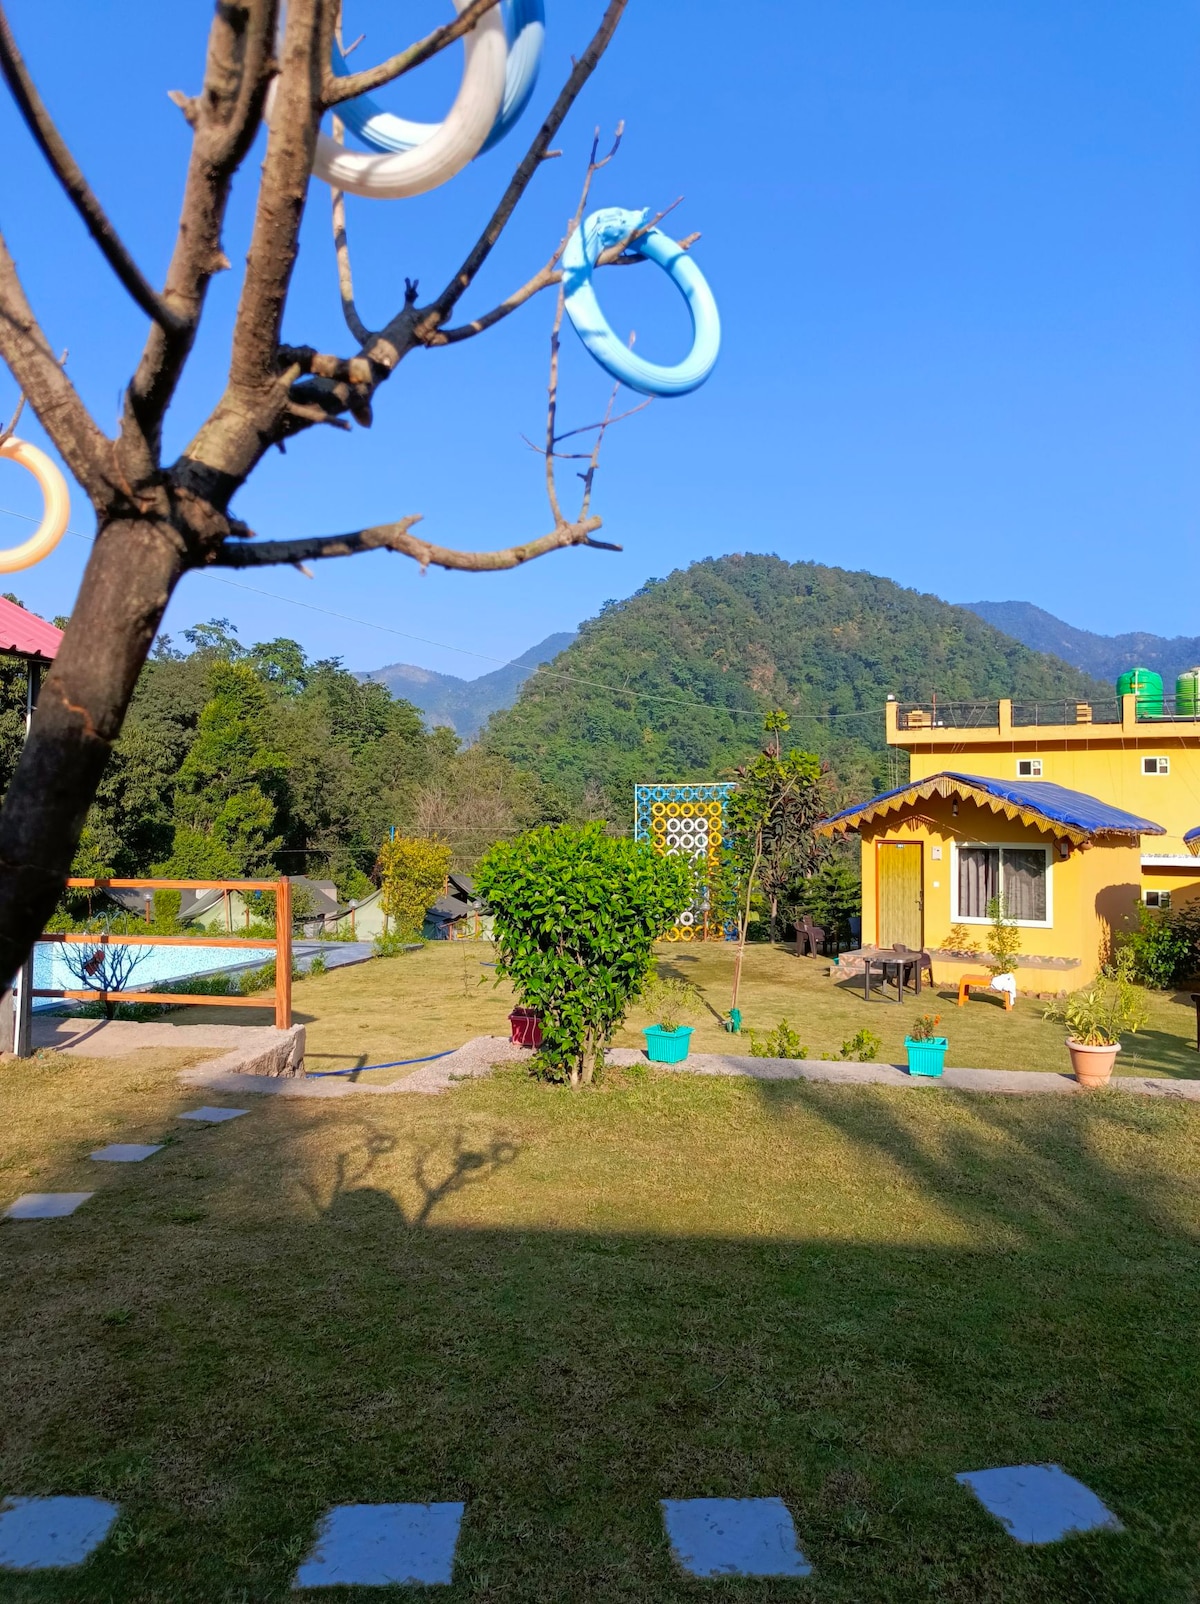 Mangalam Valley resort & Yoga retreat